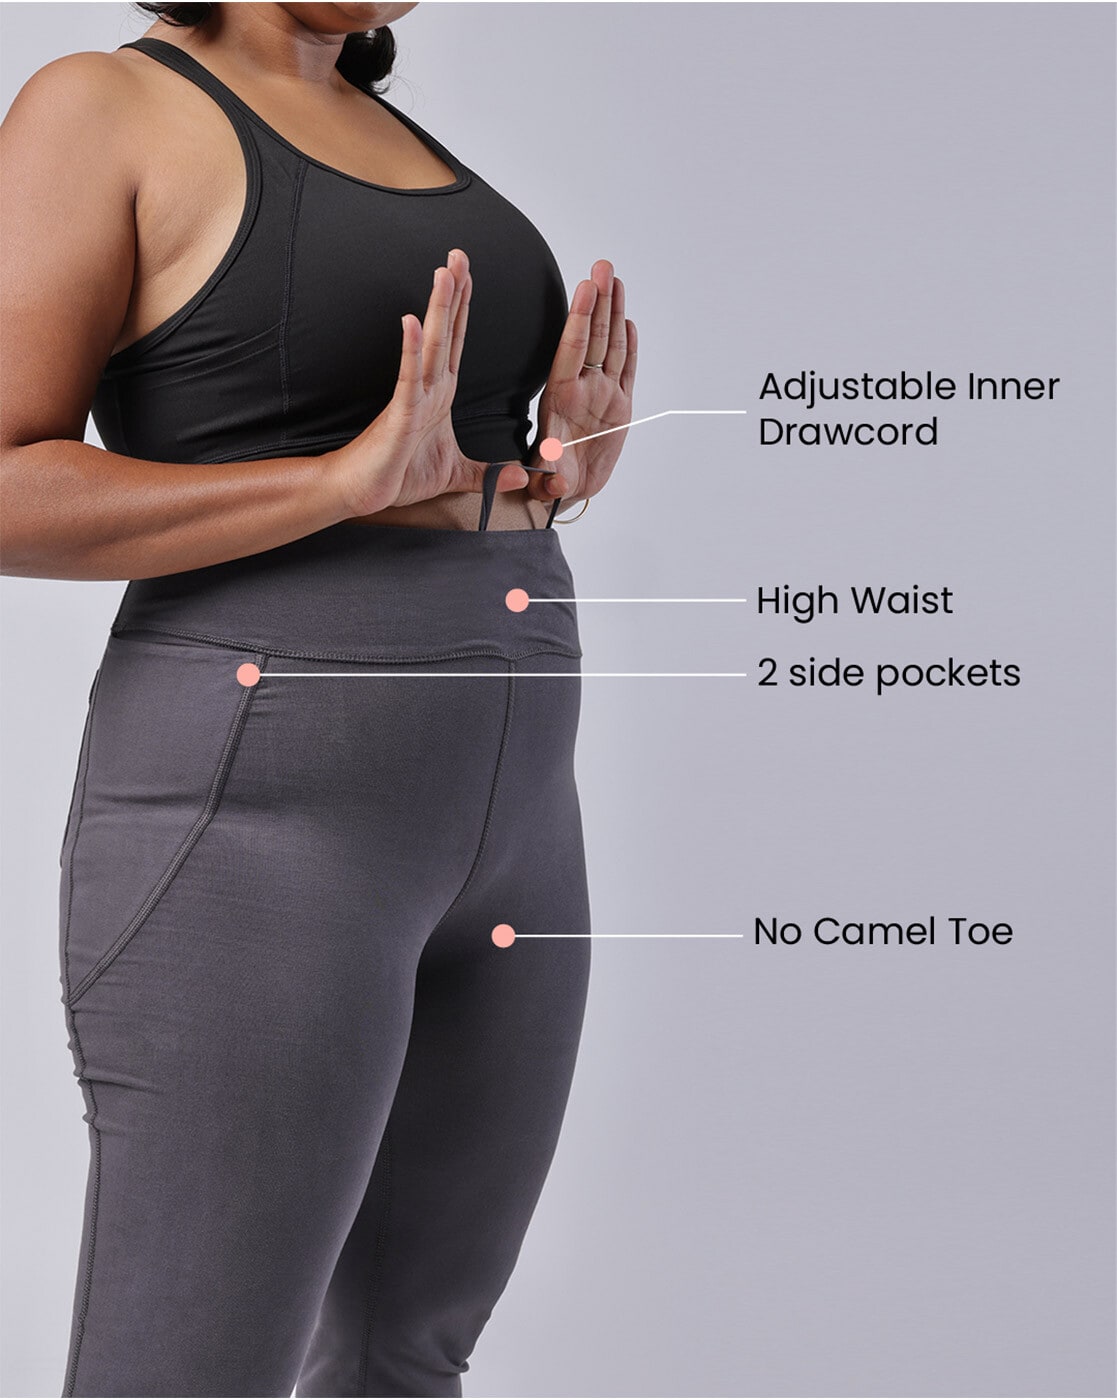 Buy Gowri Grey Track Pants for Women by BLISSCLUB Online